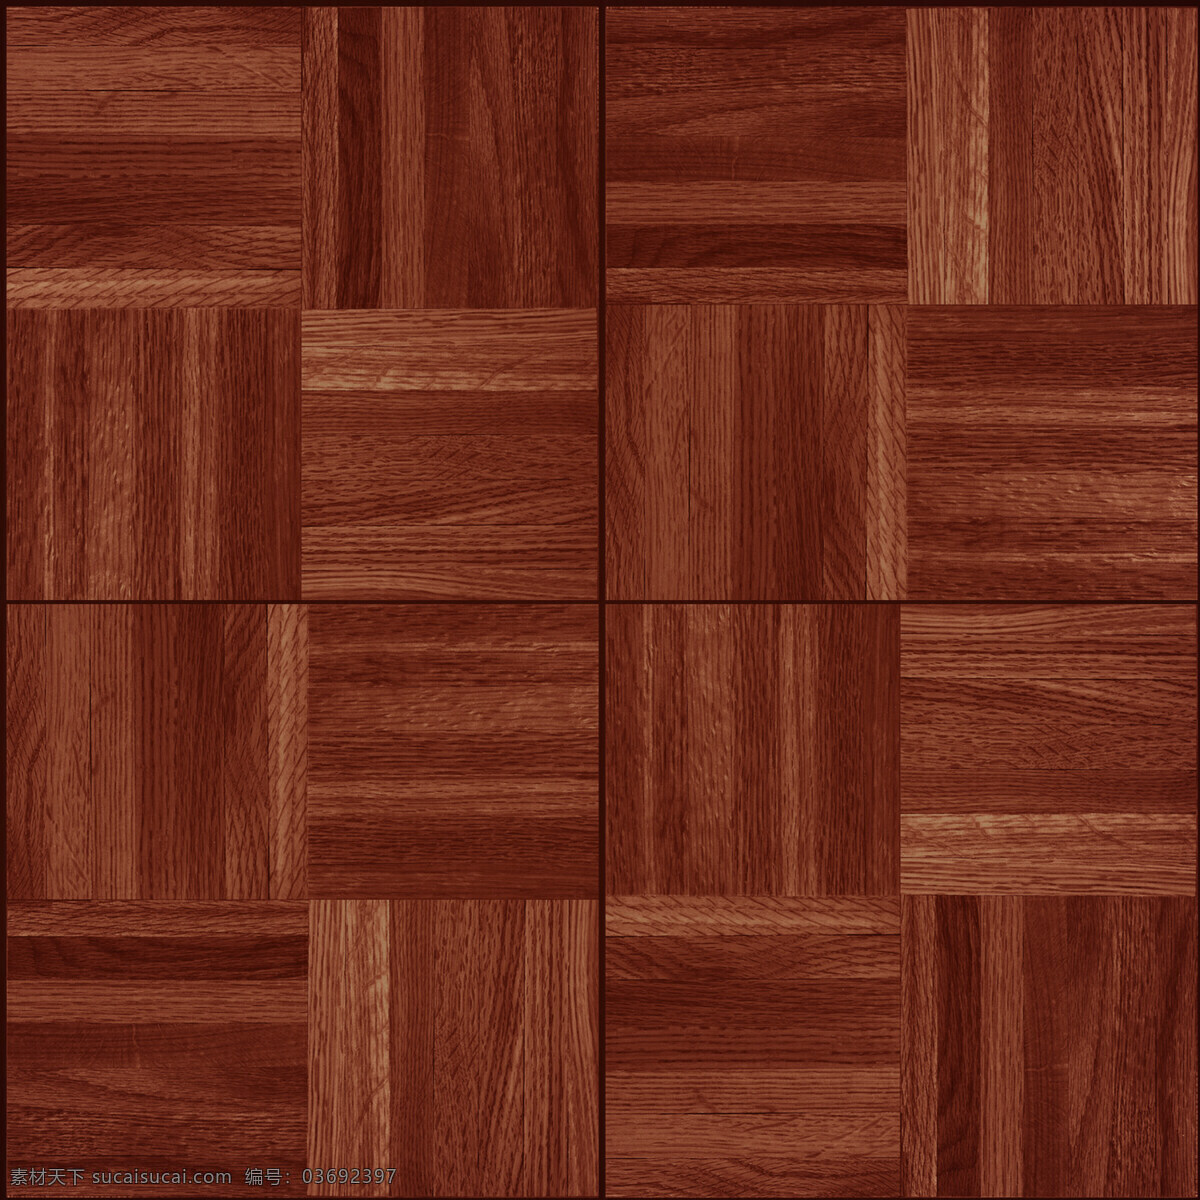 vray 木地板 材质 max9 方格 格子 光滑 木材 有贴图 抛光 3d模型素材 材质贴图